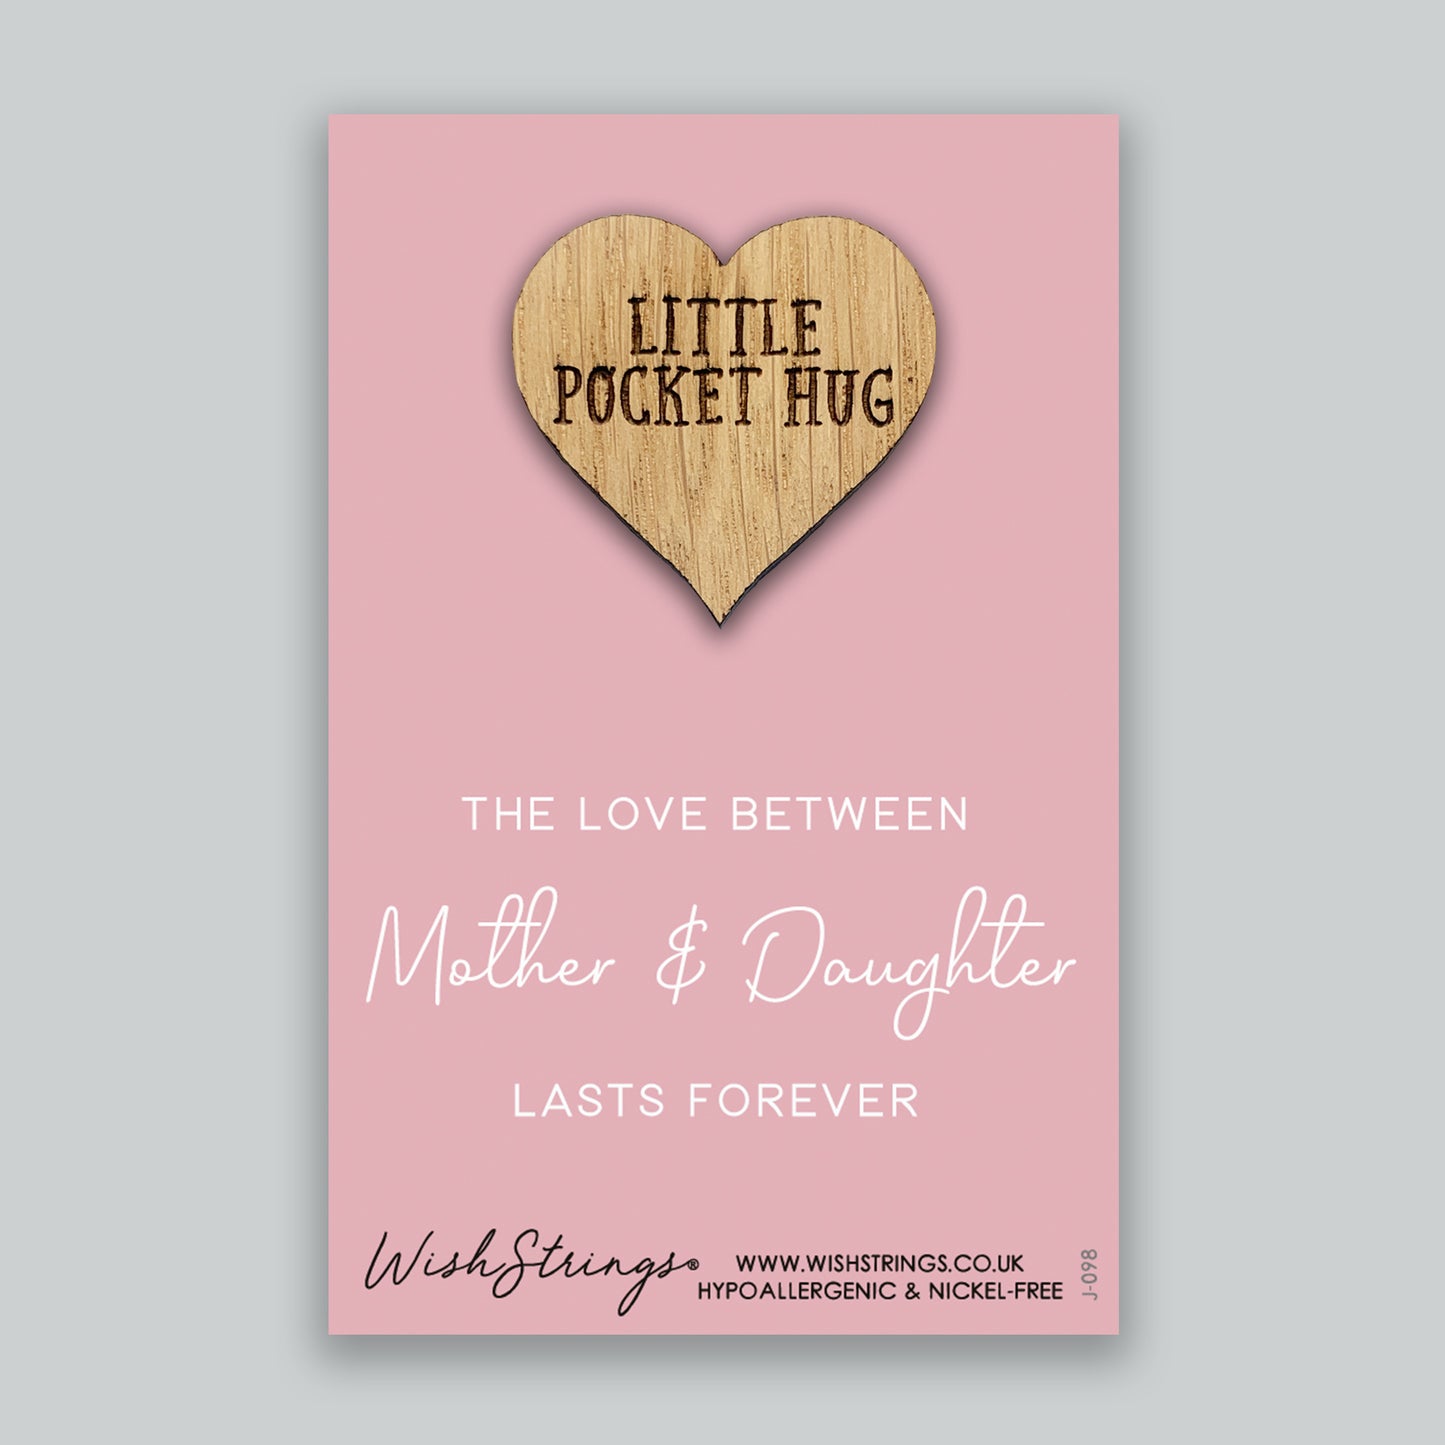 Mother & Daughter - Little Pocket Hug - Wooden Heart Keepsake Token